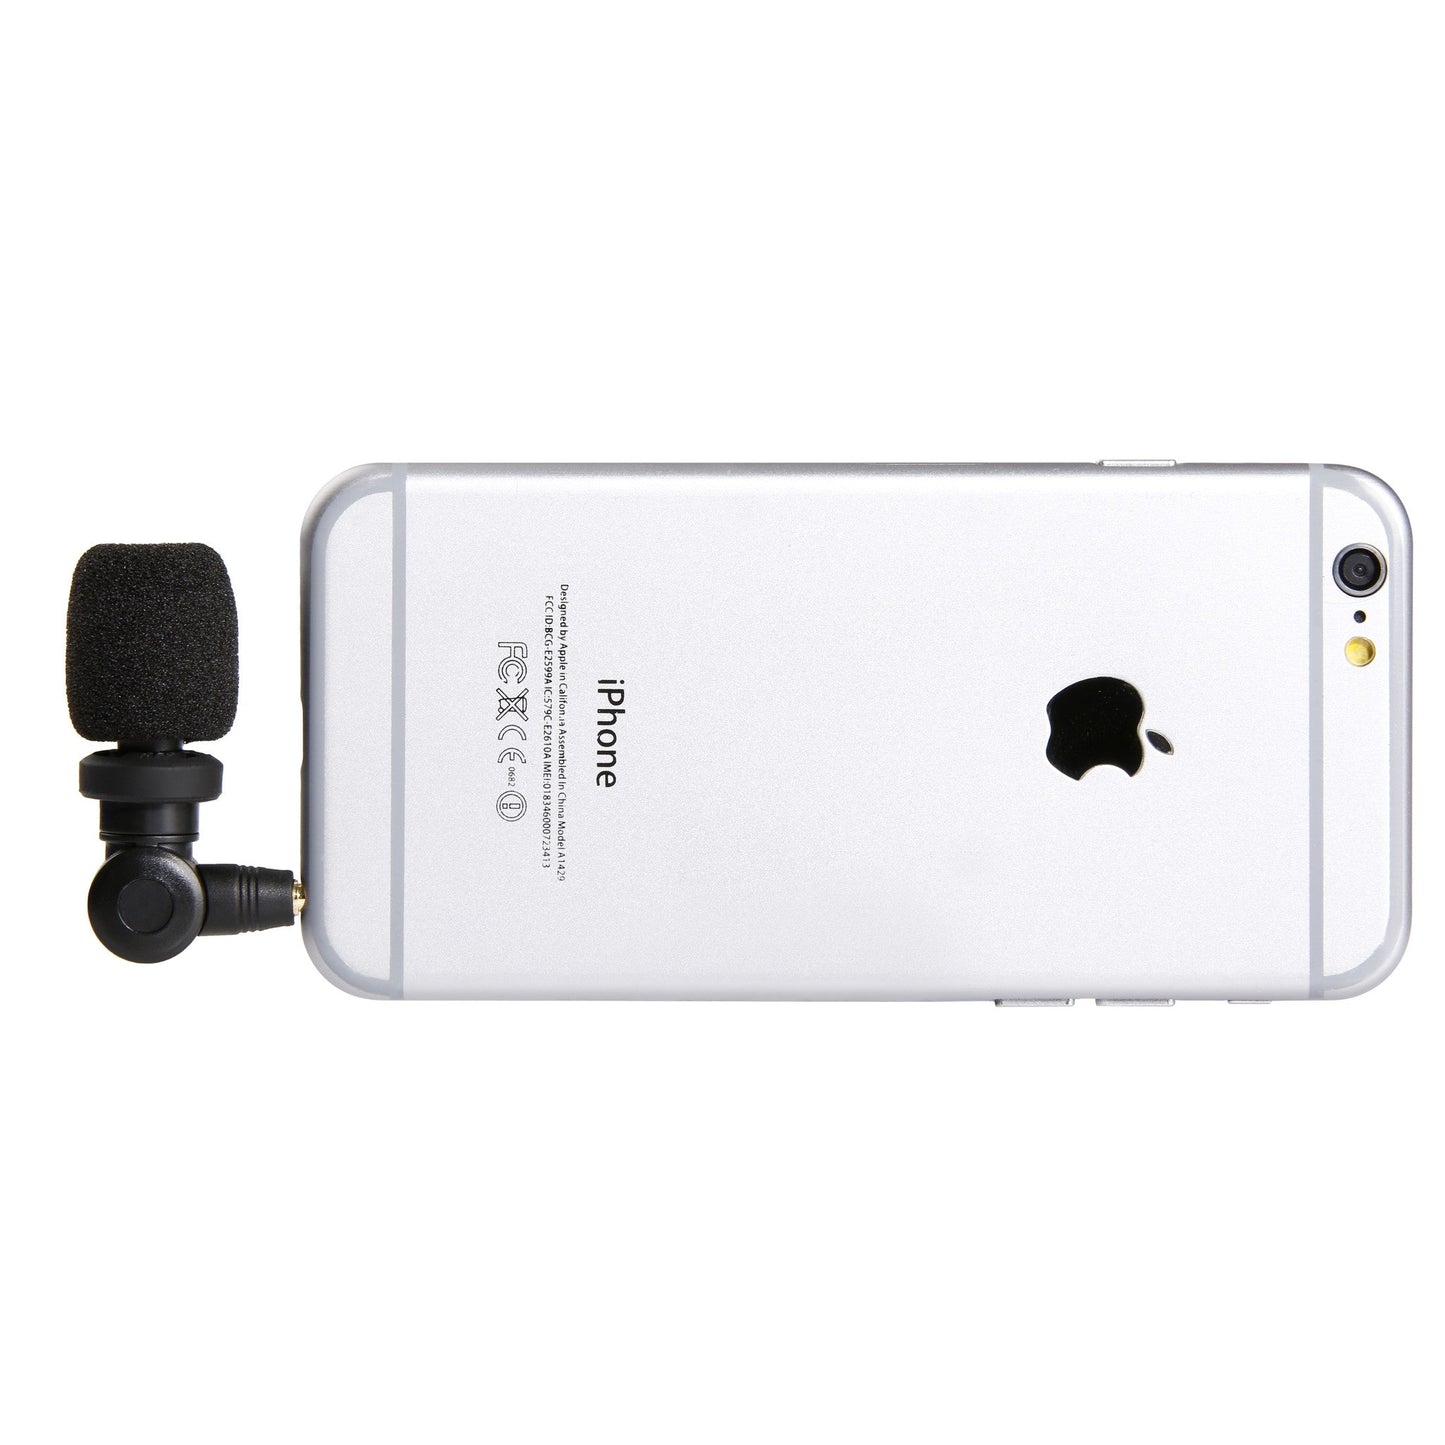 Saramonic SmartMic Condenser Microphone for iPhone, iPad, iPod Touch & Mac